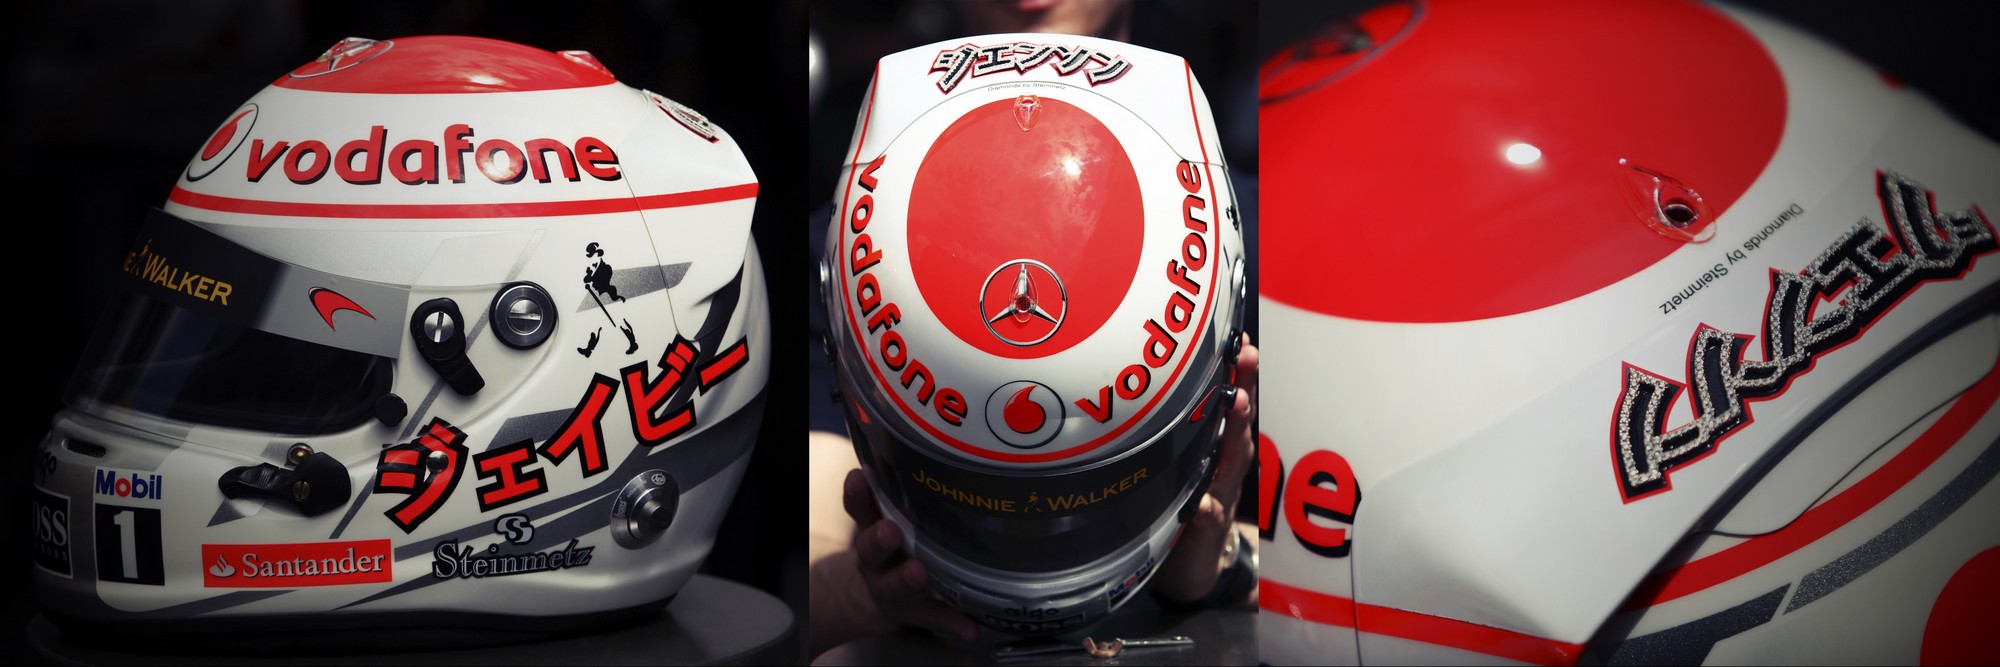 Шлем Дженсона Баттона на Гран-При Монако 2011 | 2011 Monaco Grand Prix helmet of Jenson Button